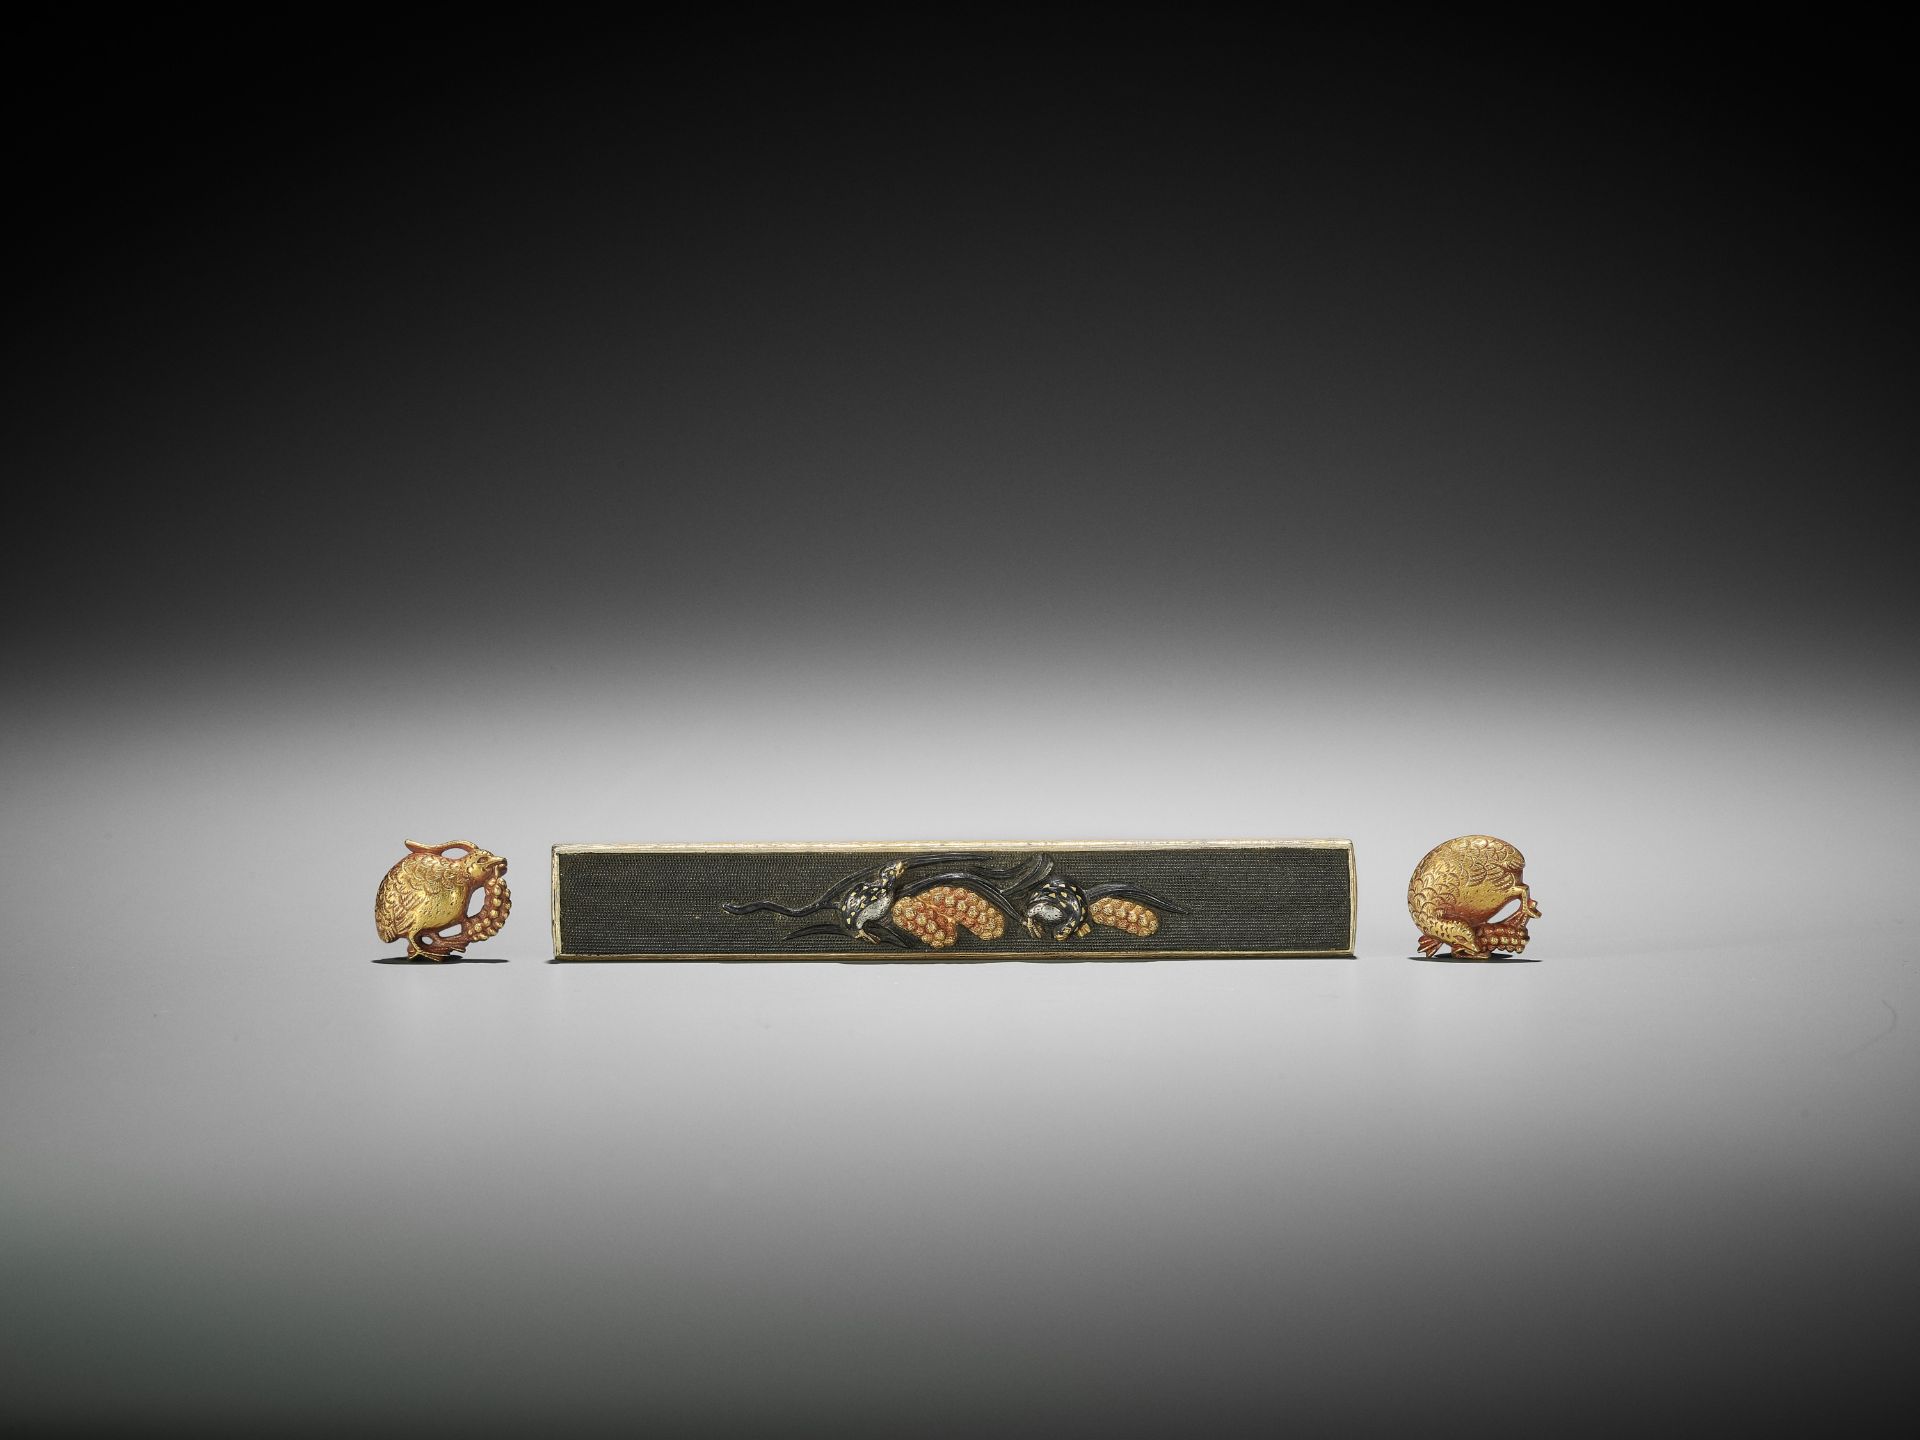 A RARE SET OF A KOZUKA AND MATCHING GOLD MENUKI PAIR DEPICTING QUAILS AND MILLET - Image 2 of 8